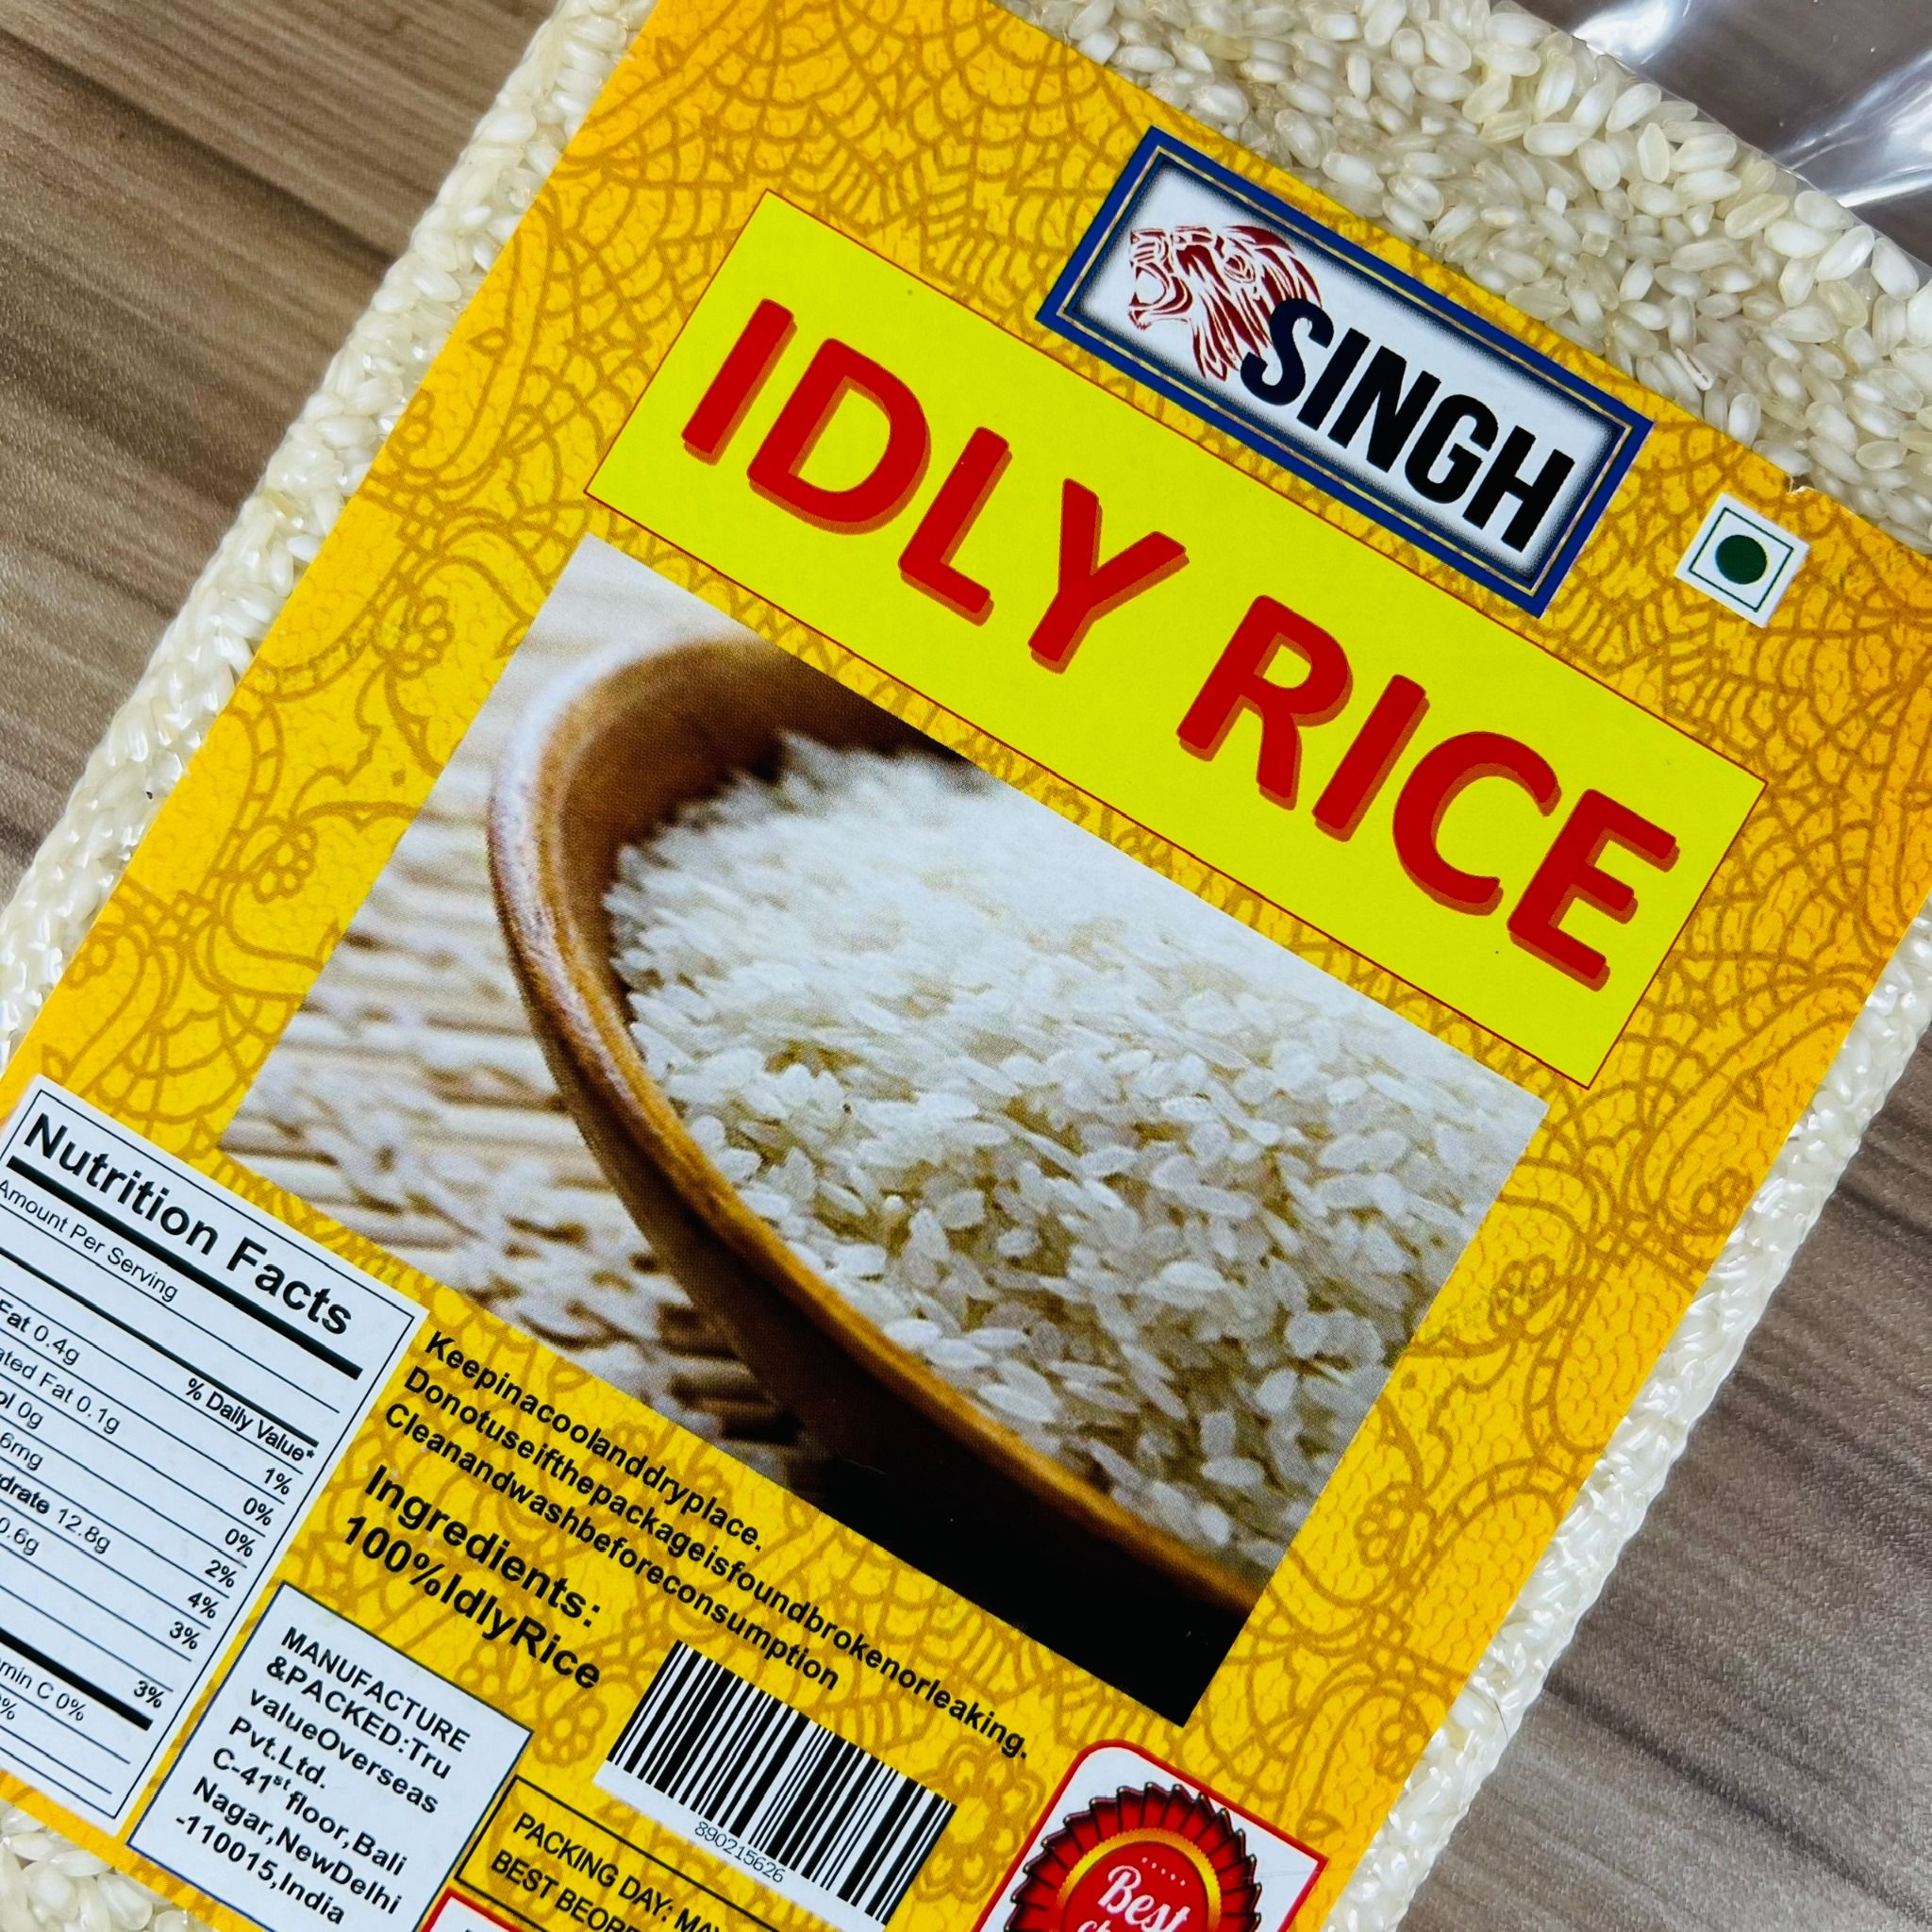 gao hat ngan tron an do singh idli rice idly rice 1 kg